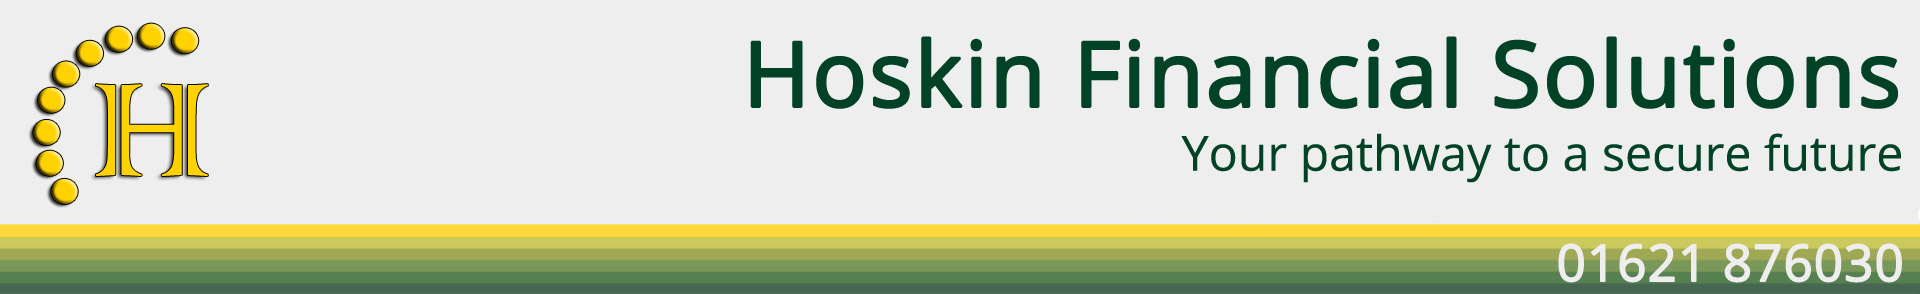 Hoskin Financial Planning